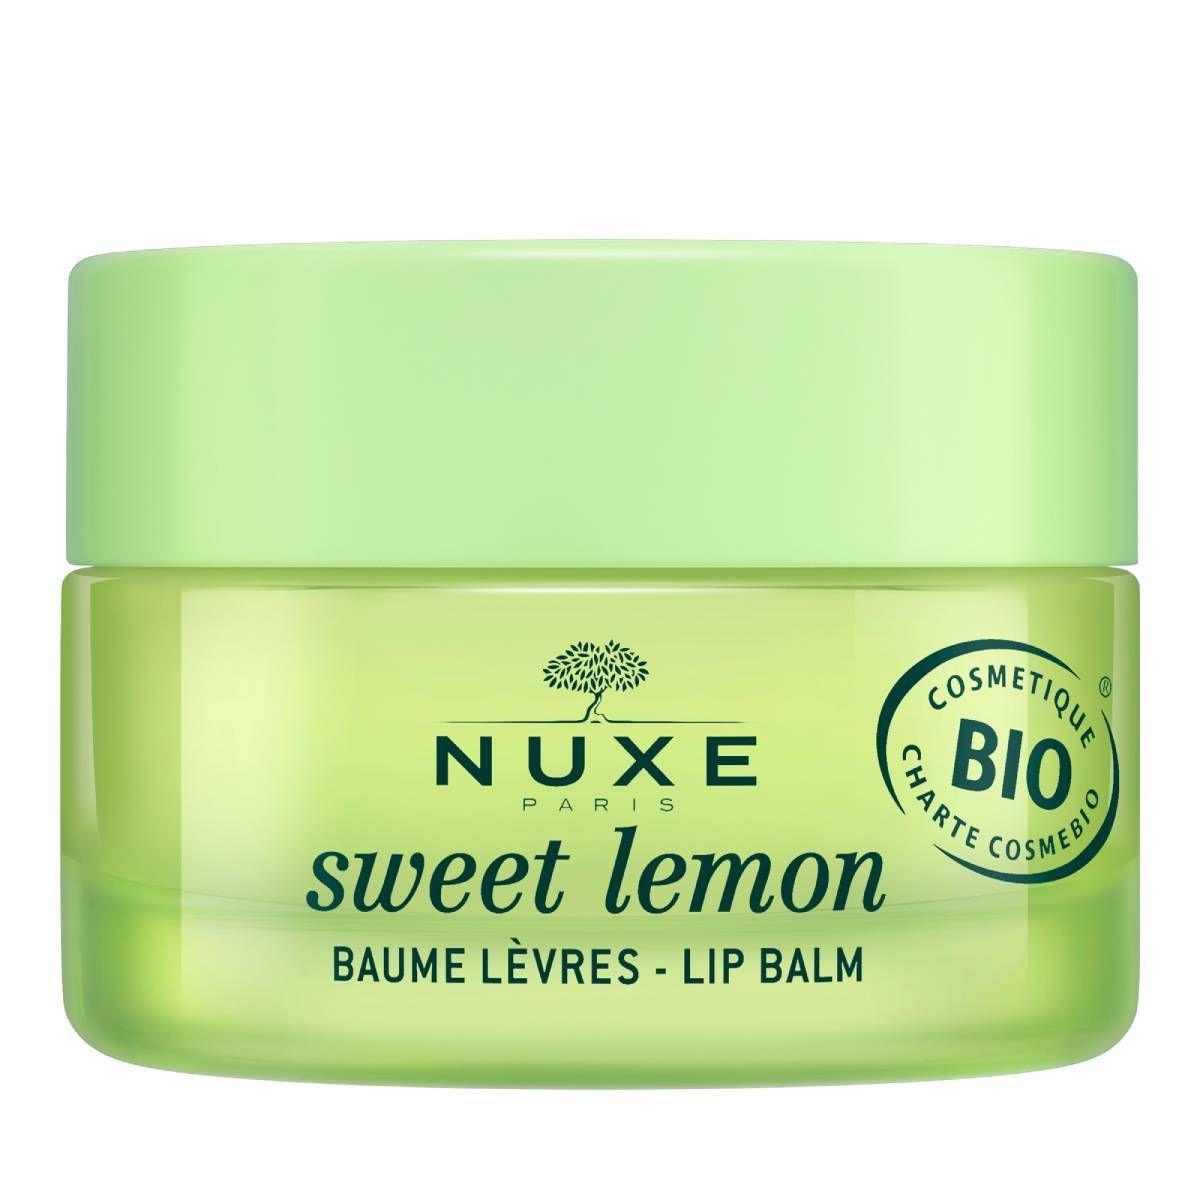 Sweet lemon, de Nuxe